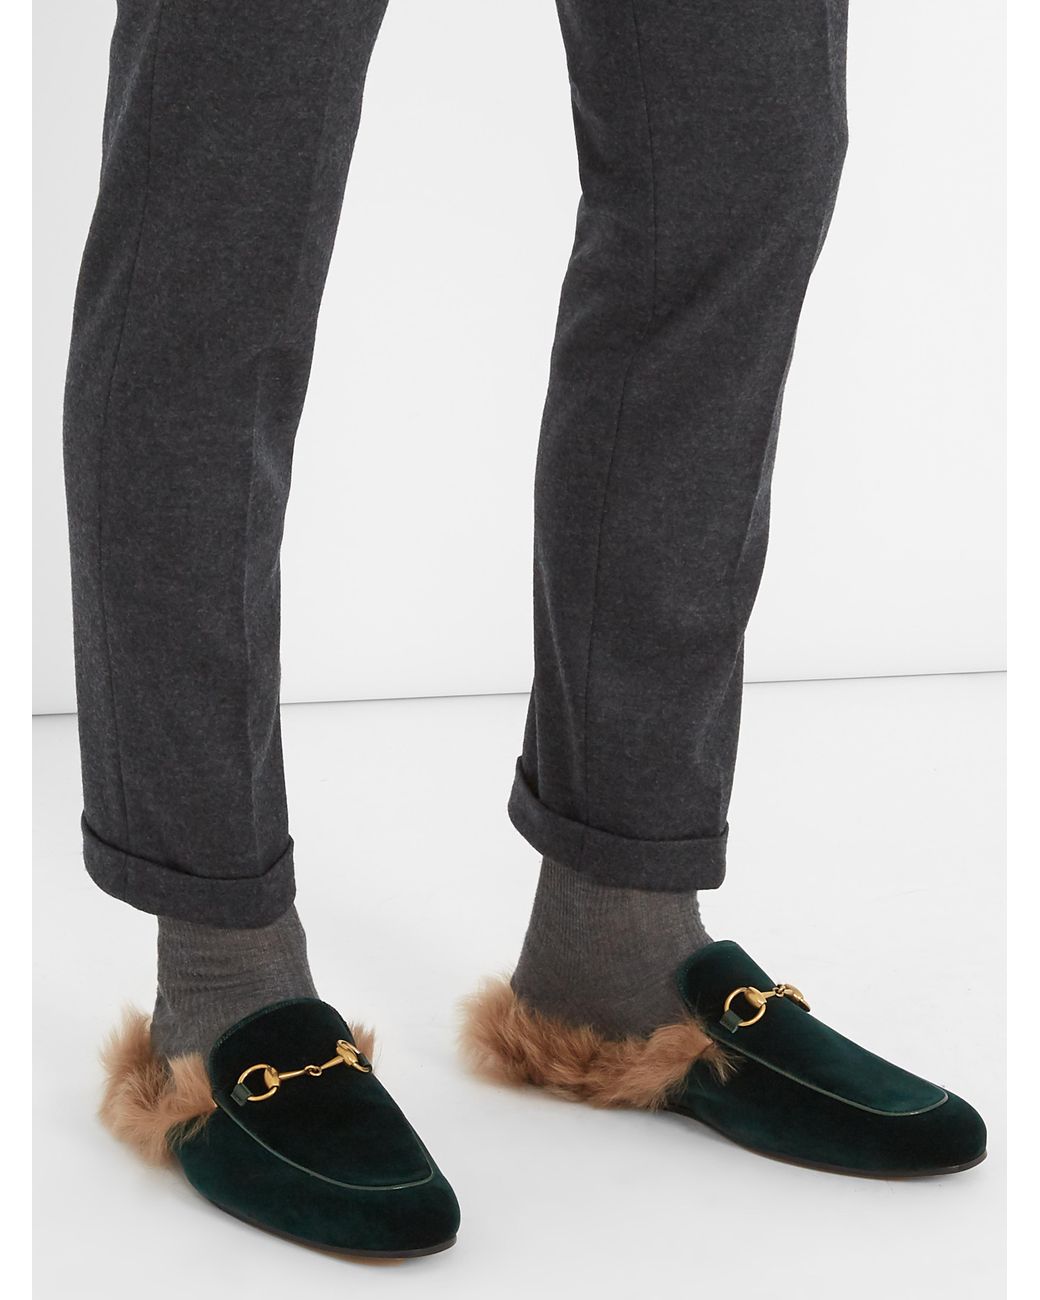 Gucci Princetown Fur-lined Velvet Loafers for Men | Lyst